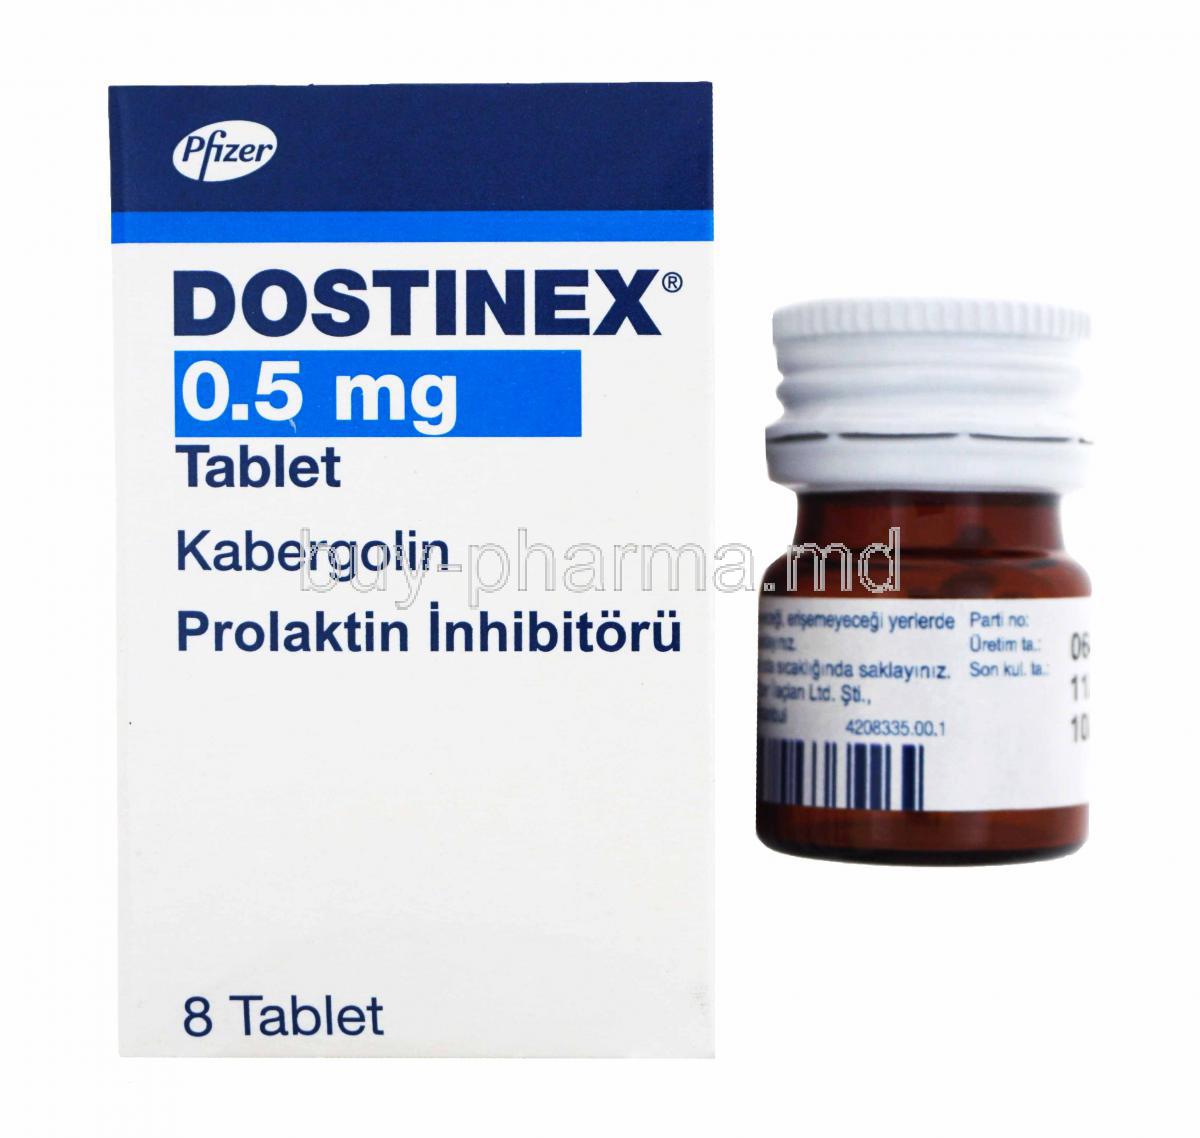 Dostinex, Cabergoline, bottle and box presentation